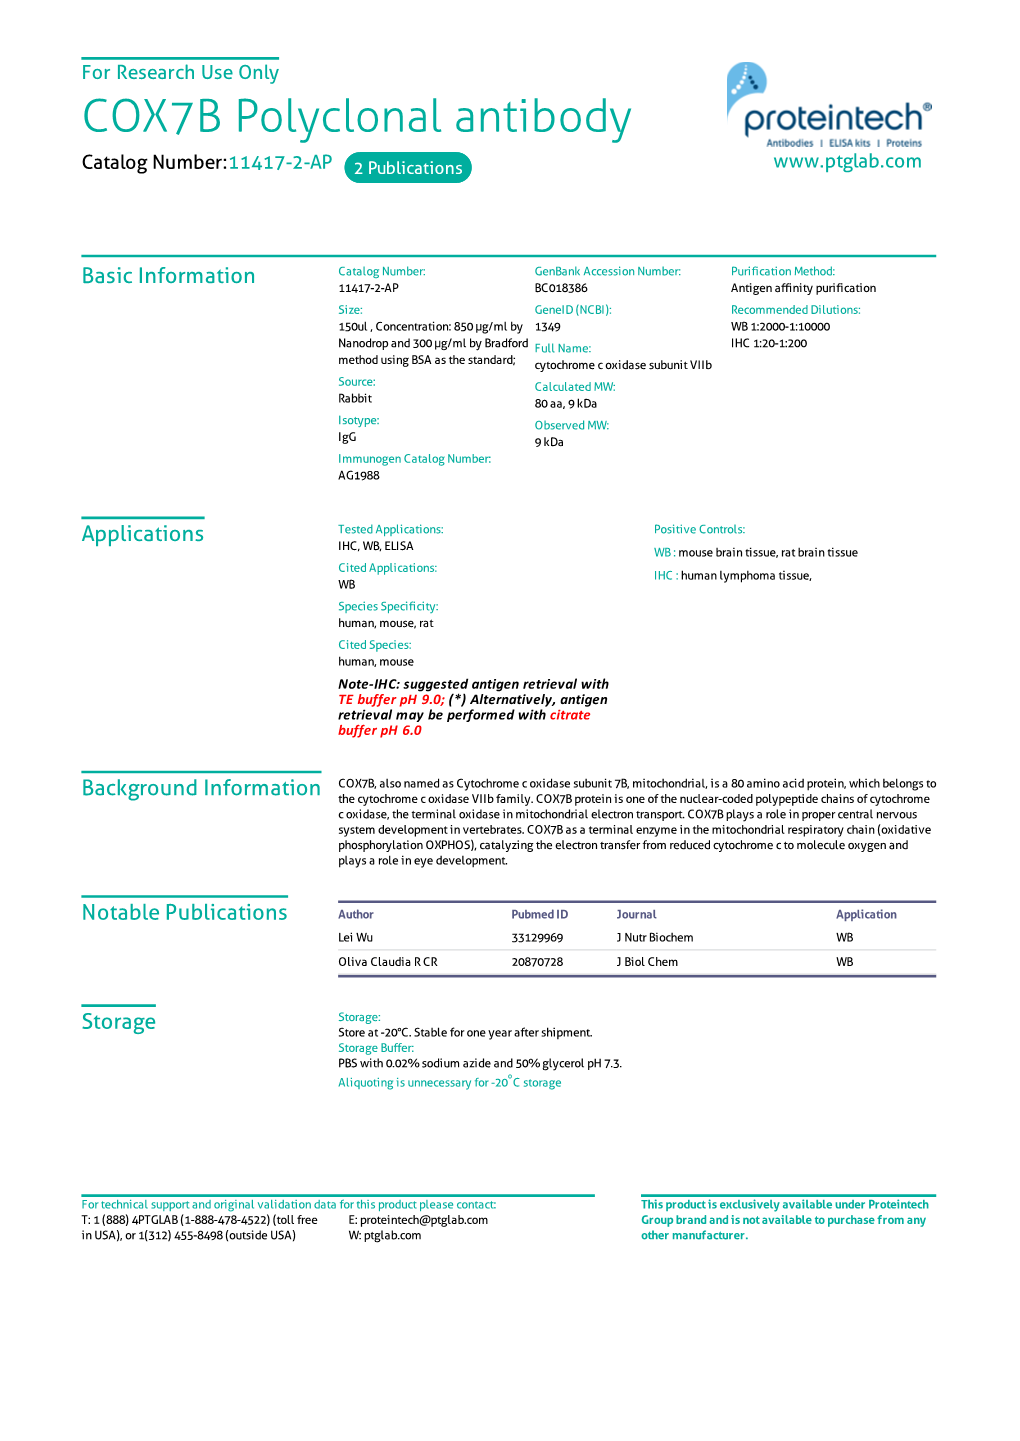 COX7B Polyclonal Antibody Catalog Number:11417-2-AP 2 Publications